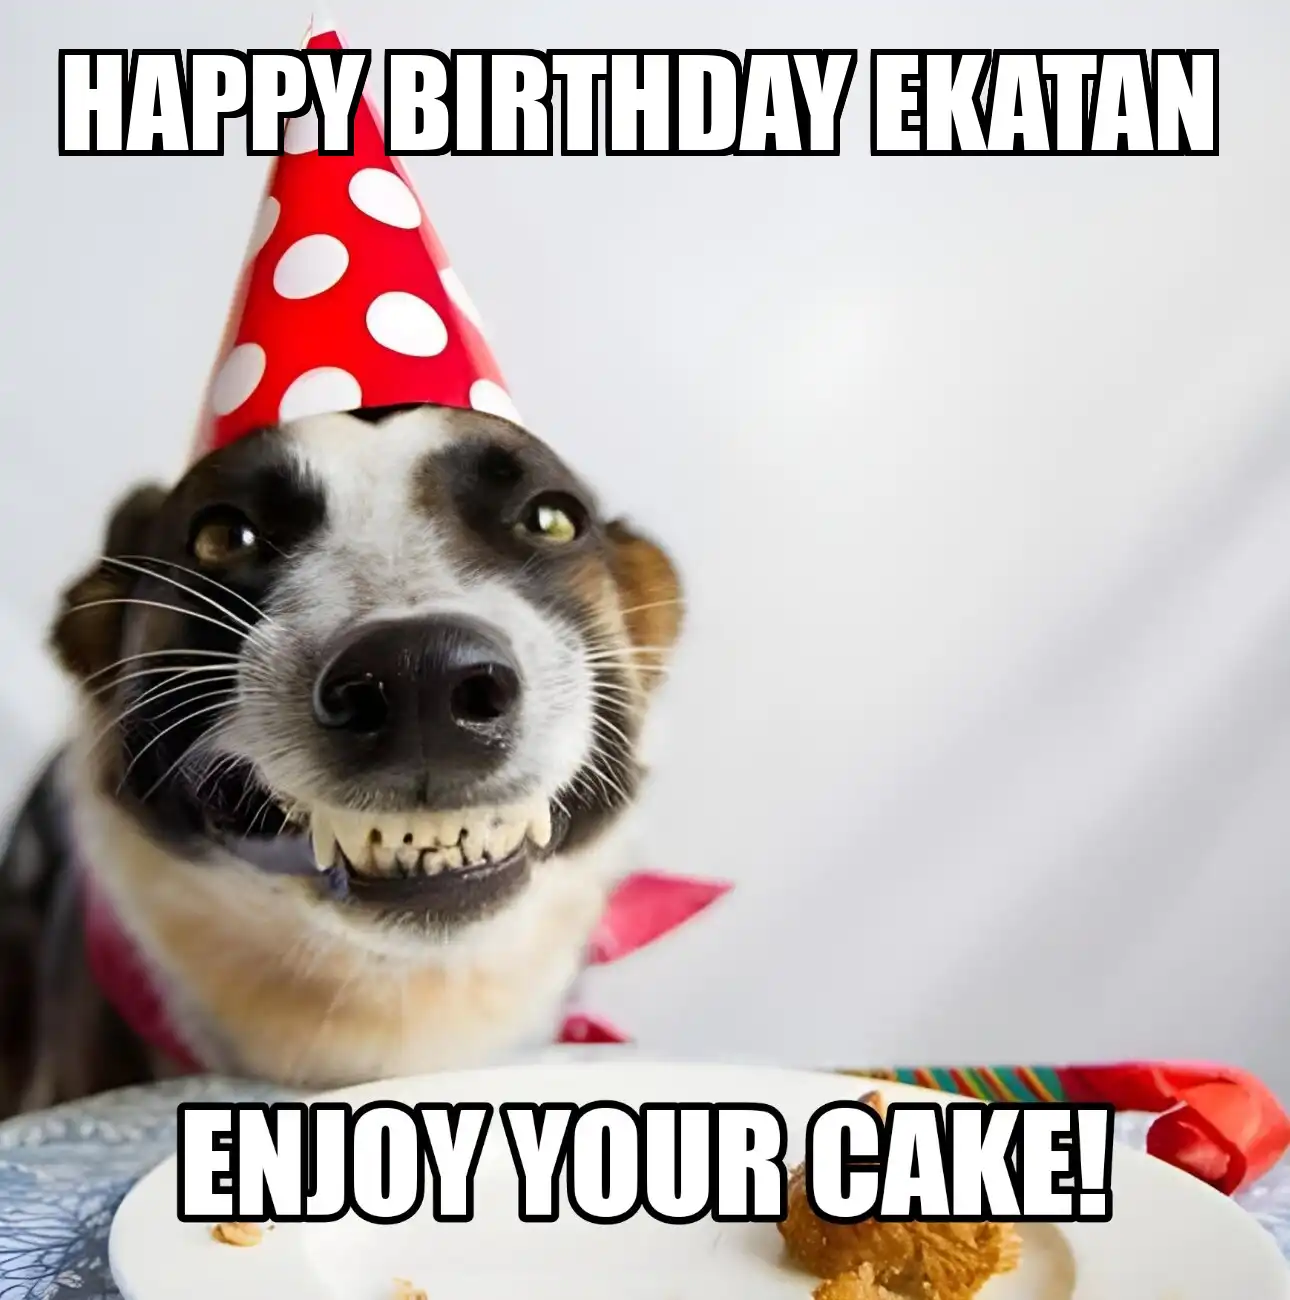 Happy Birthday Ekatan Enjoy Your Cake Dog Meme